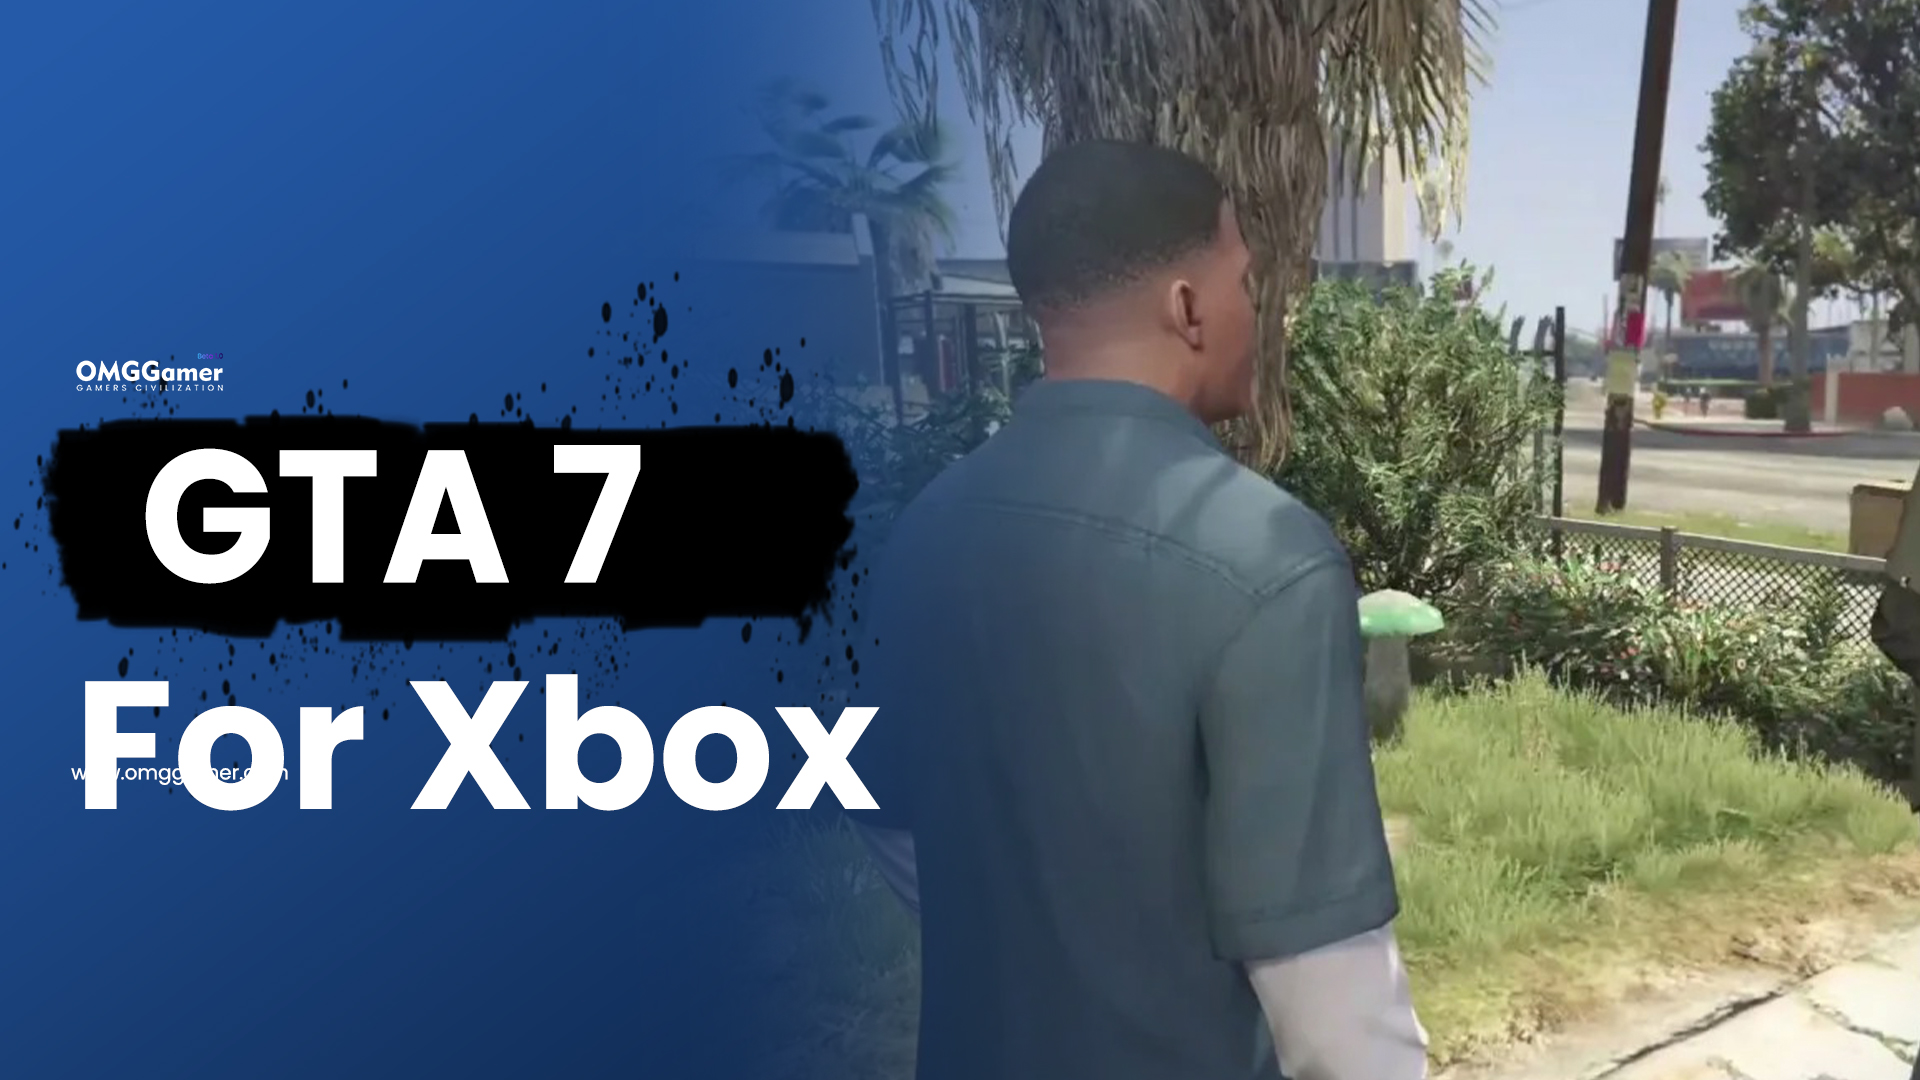 GTA 7 for Xbox